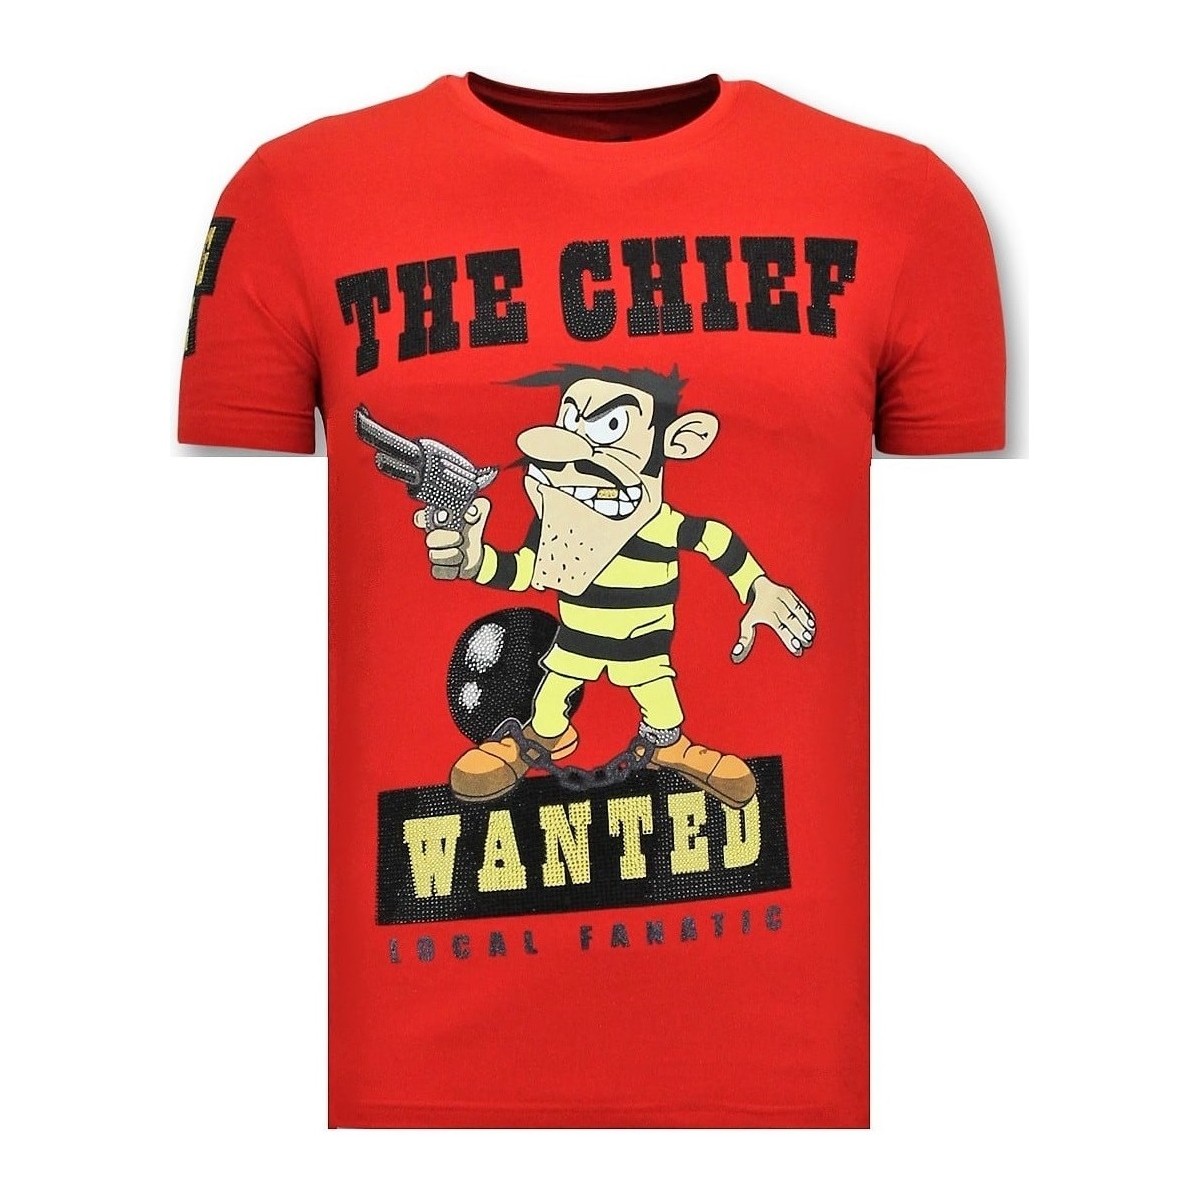 textil Herr T-shirts Local Fanatic Chief Wanted R Röd